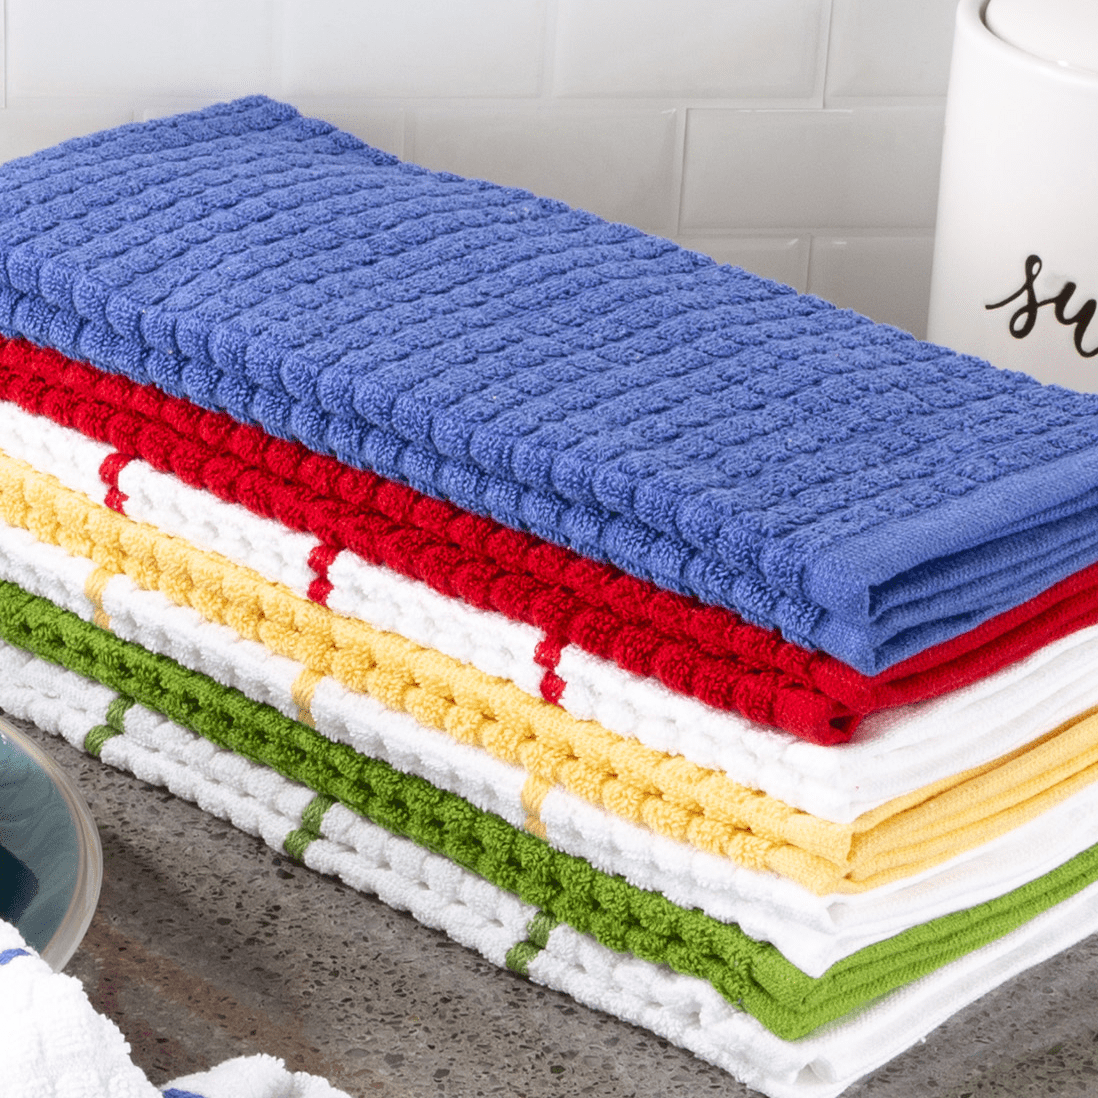 Hastings Home 16-Piece Striped Chevron Weave Kitchen Towel Set - 20313696